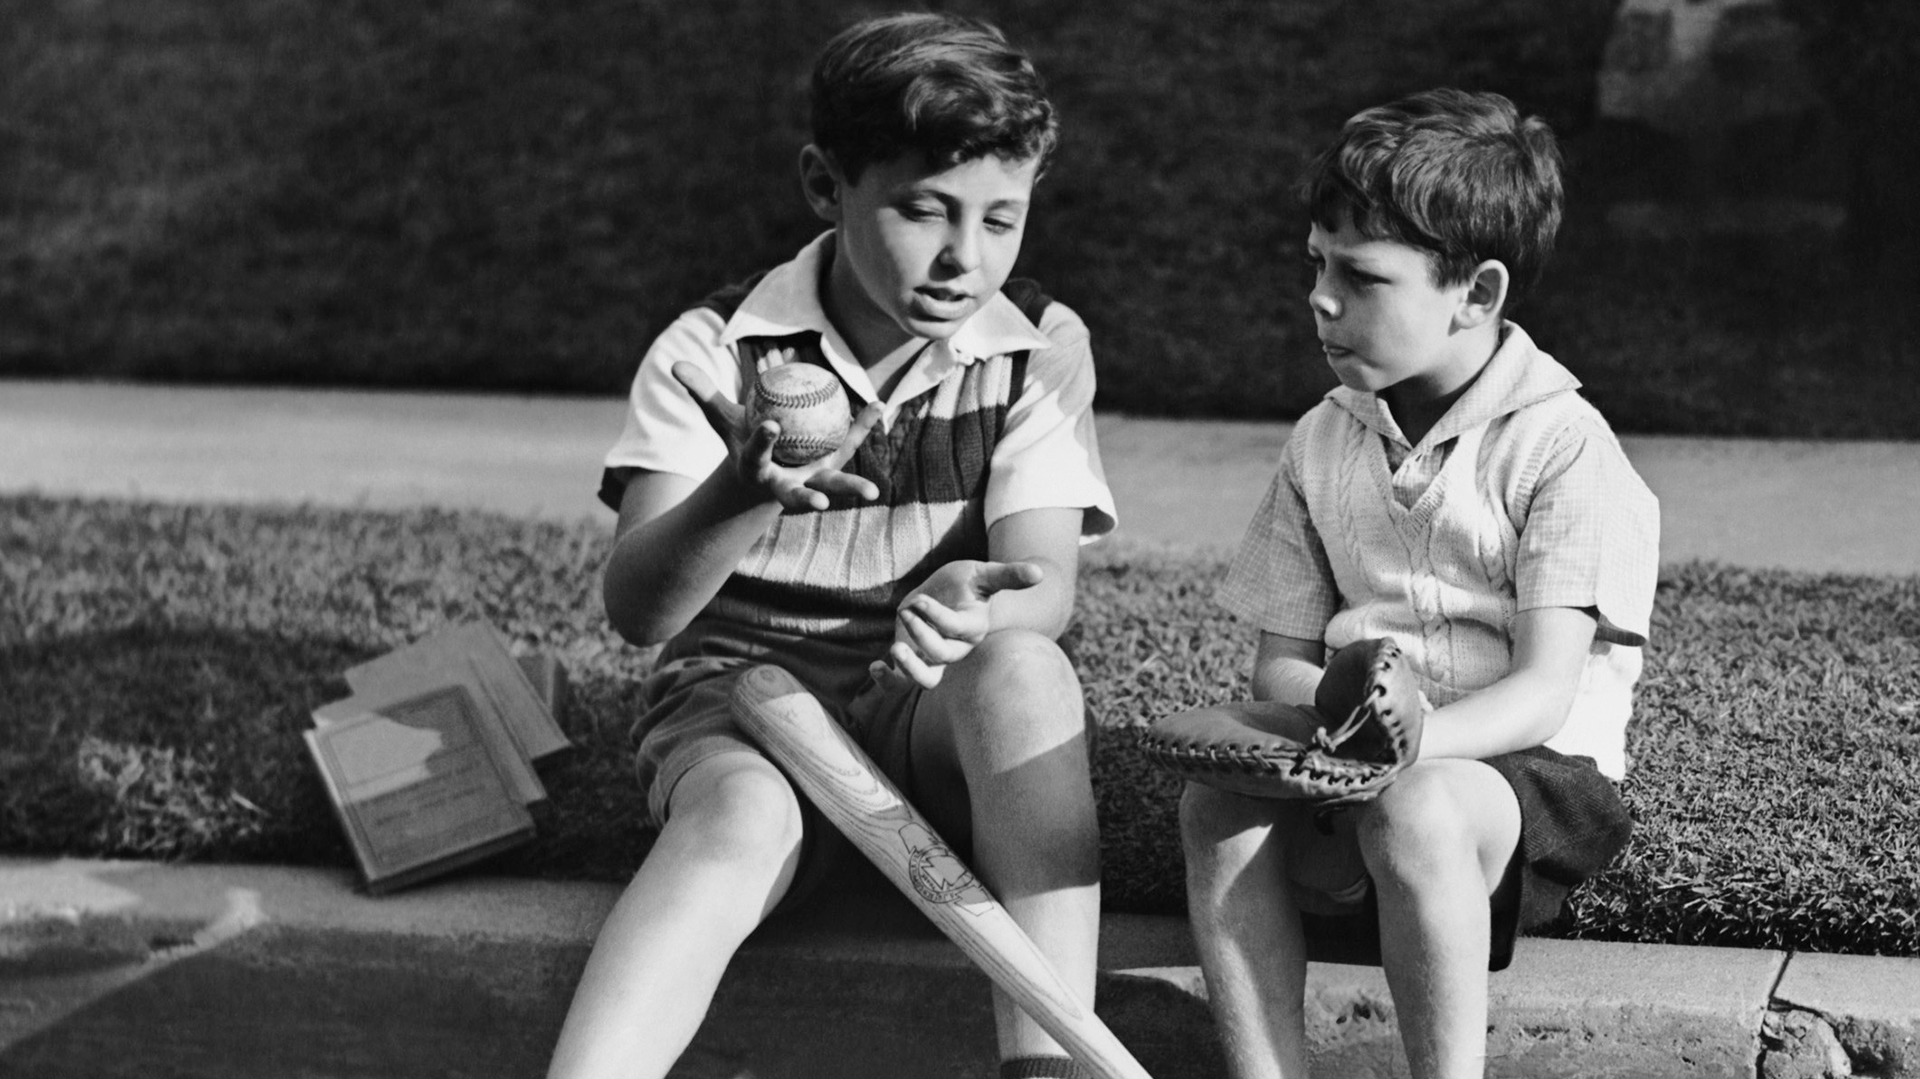 UNITED STATES - CIRCA 1950s: Two boys playing baseball.